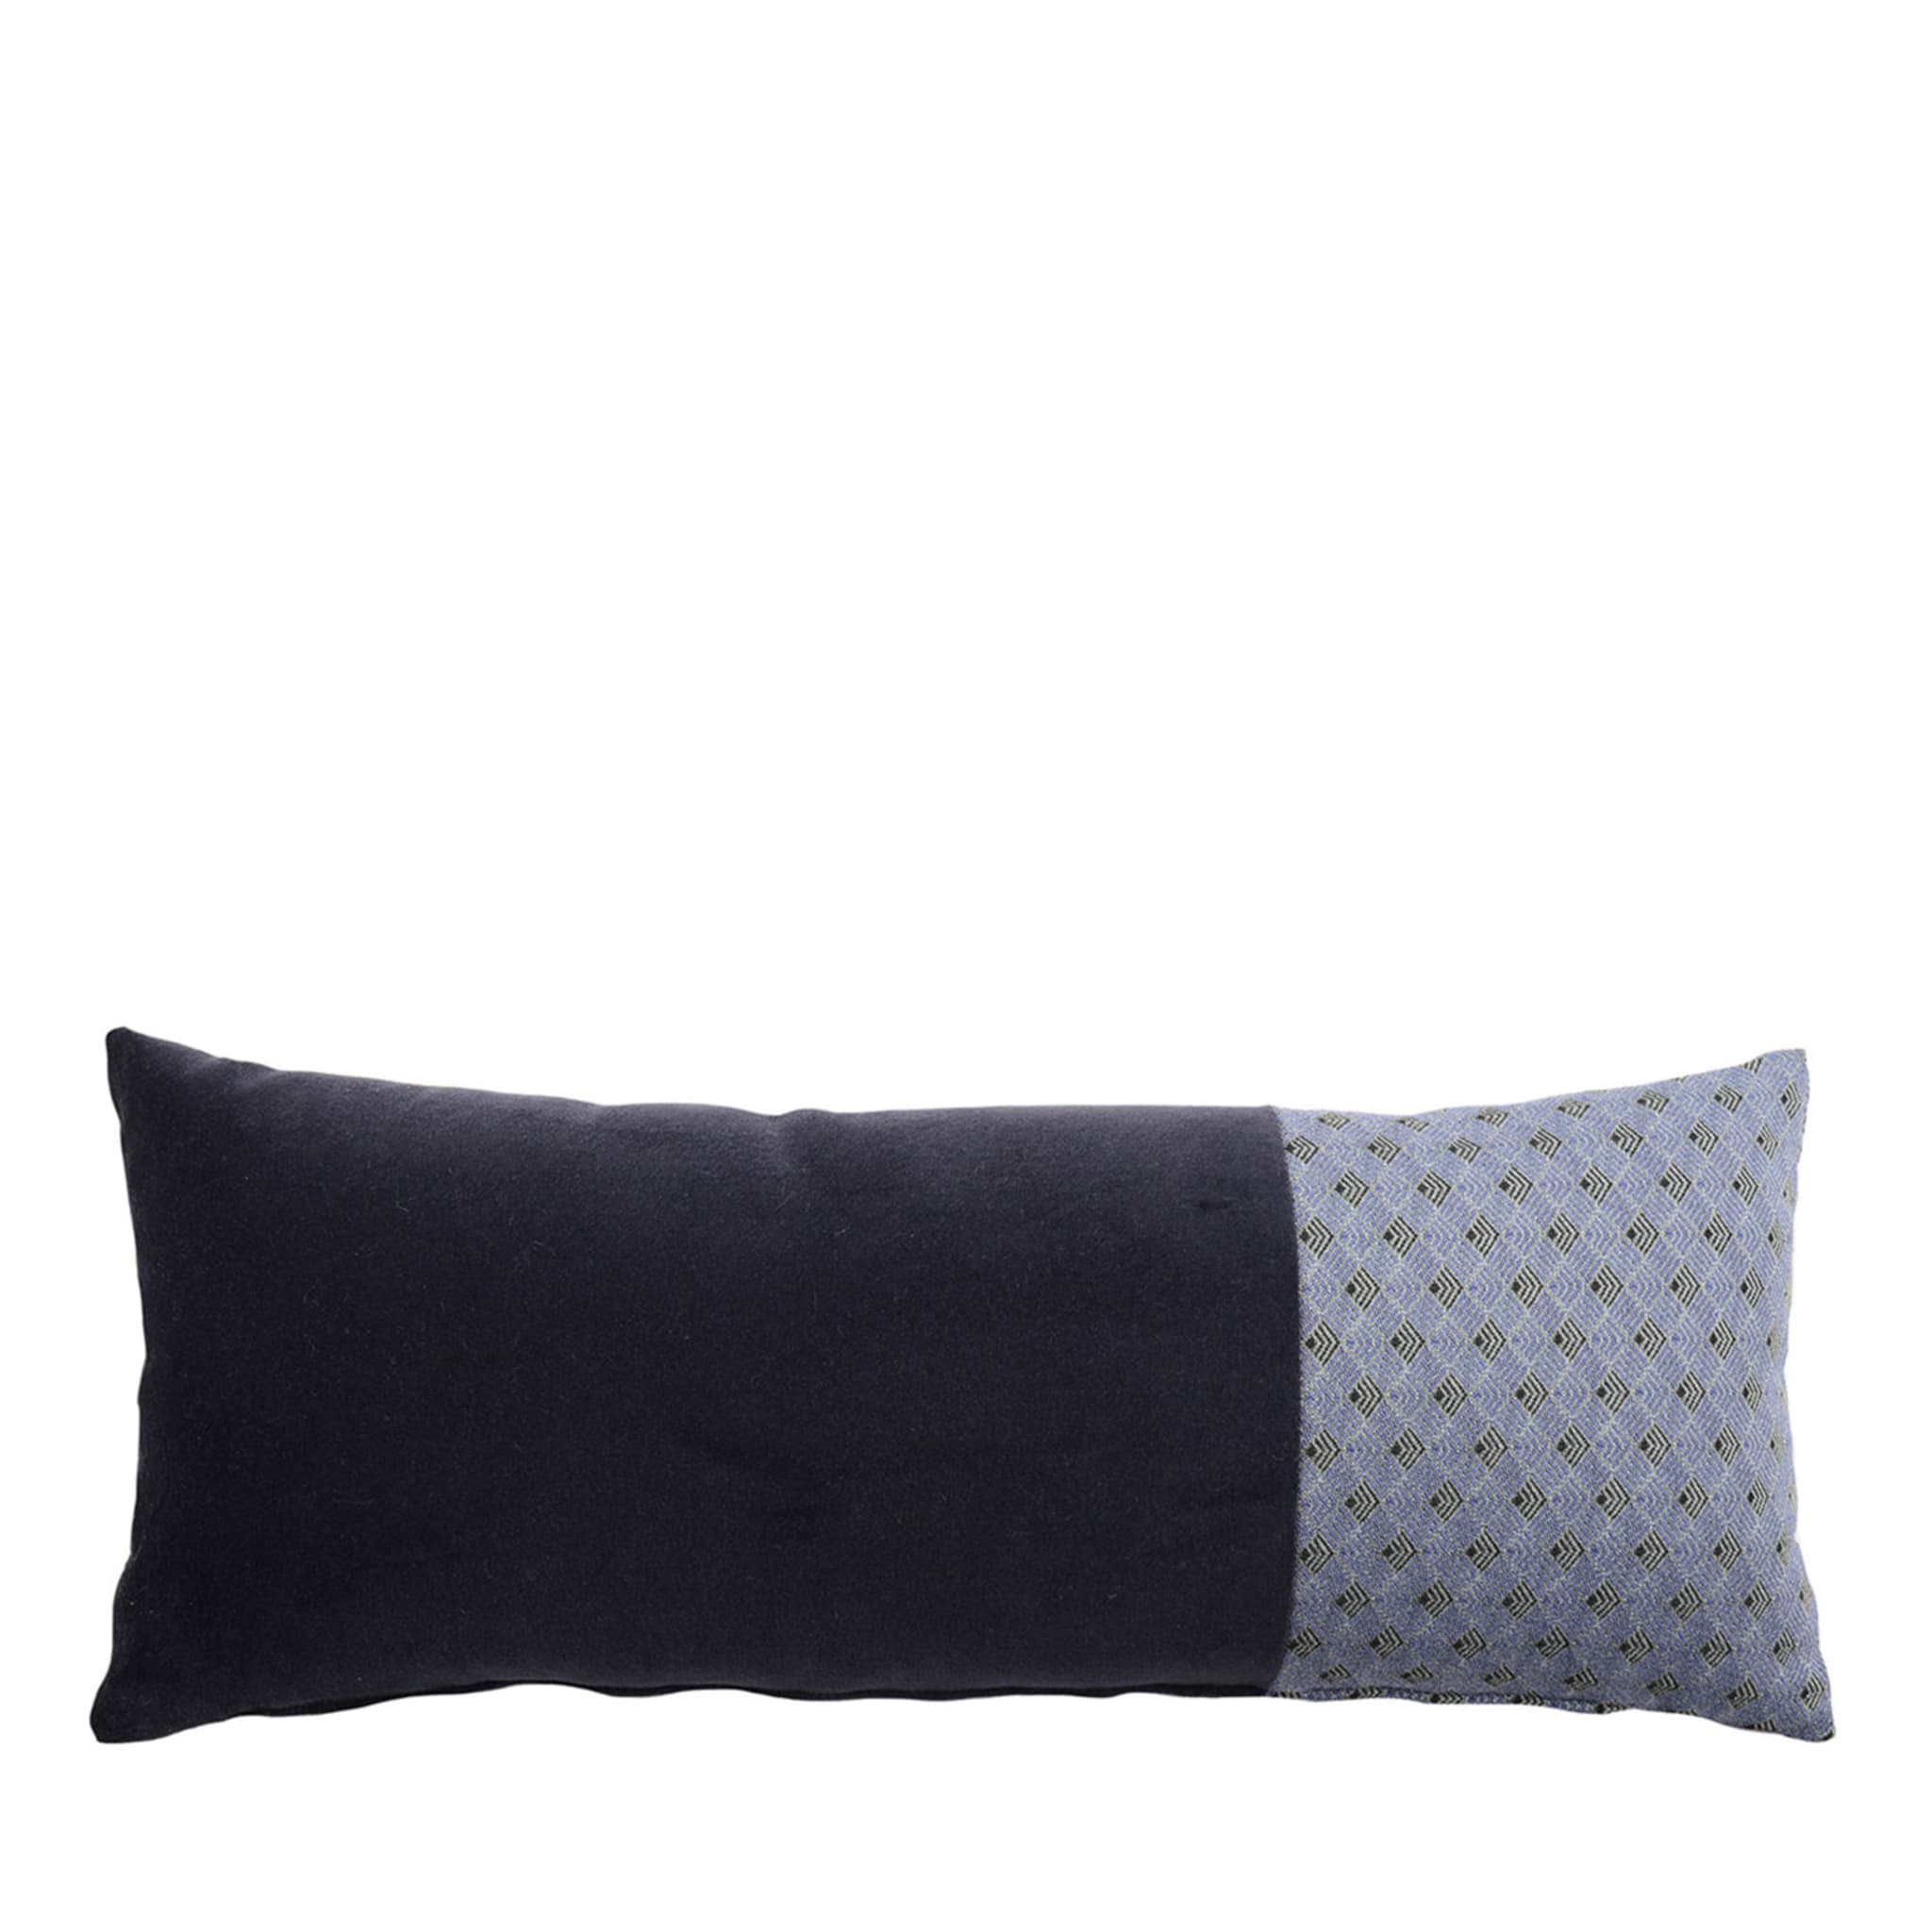 Simple Black and Blue Cushion - Main view